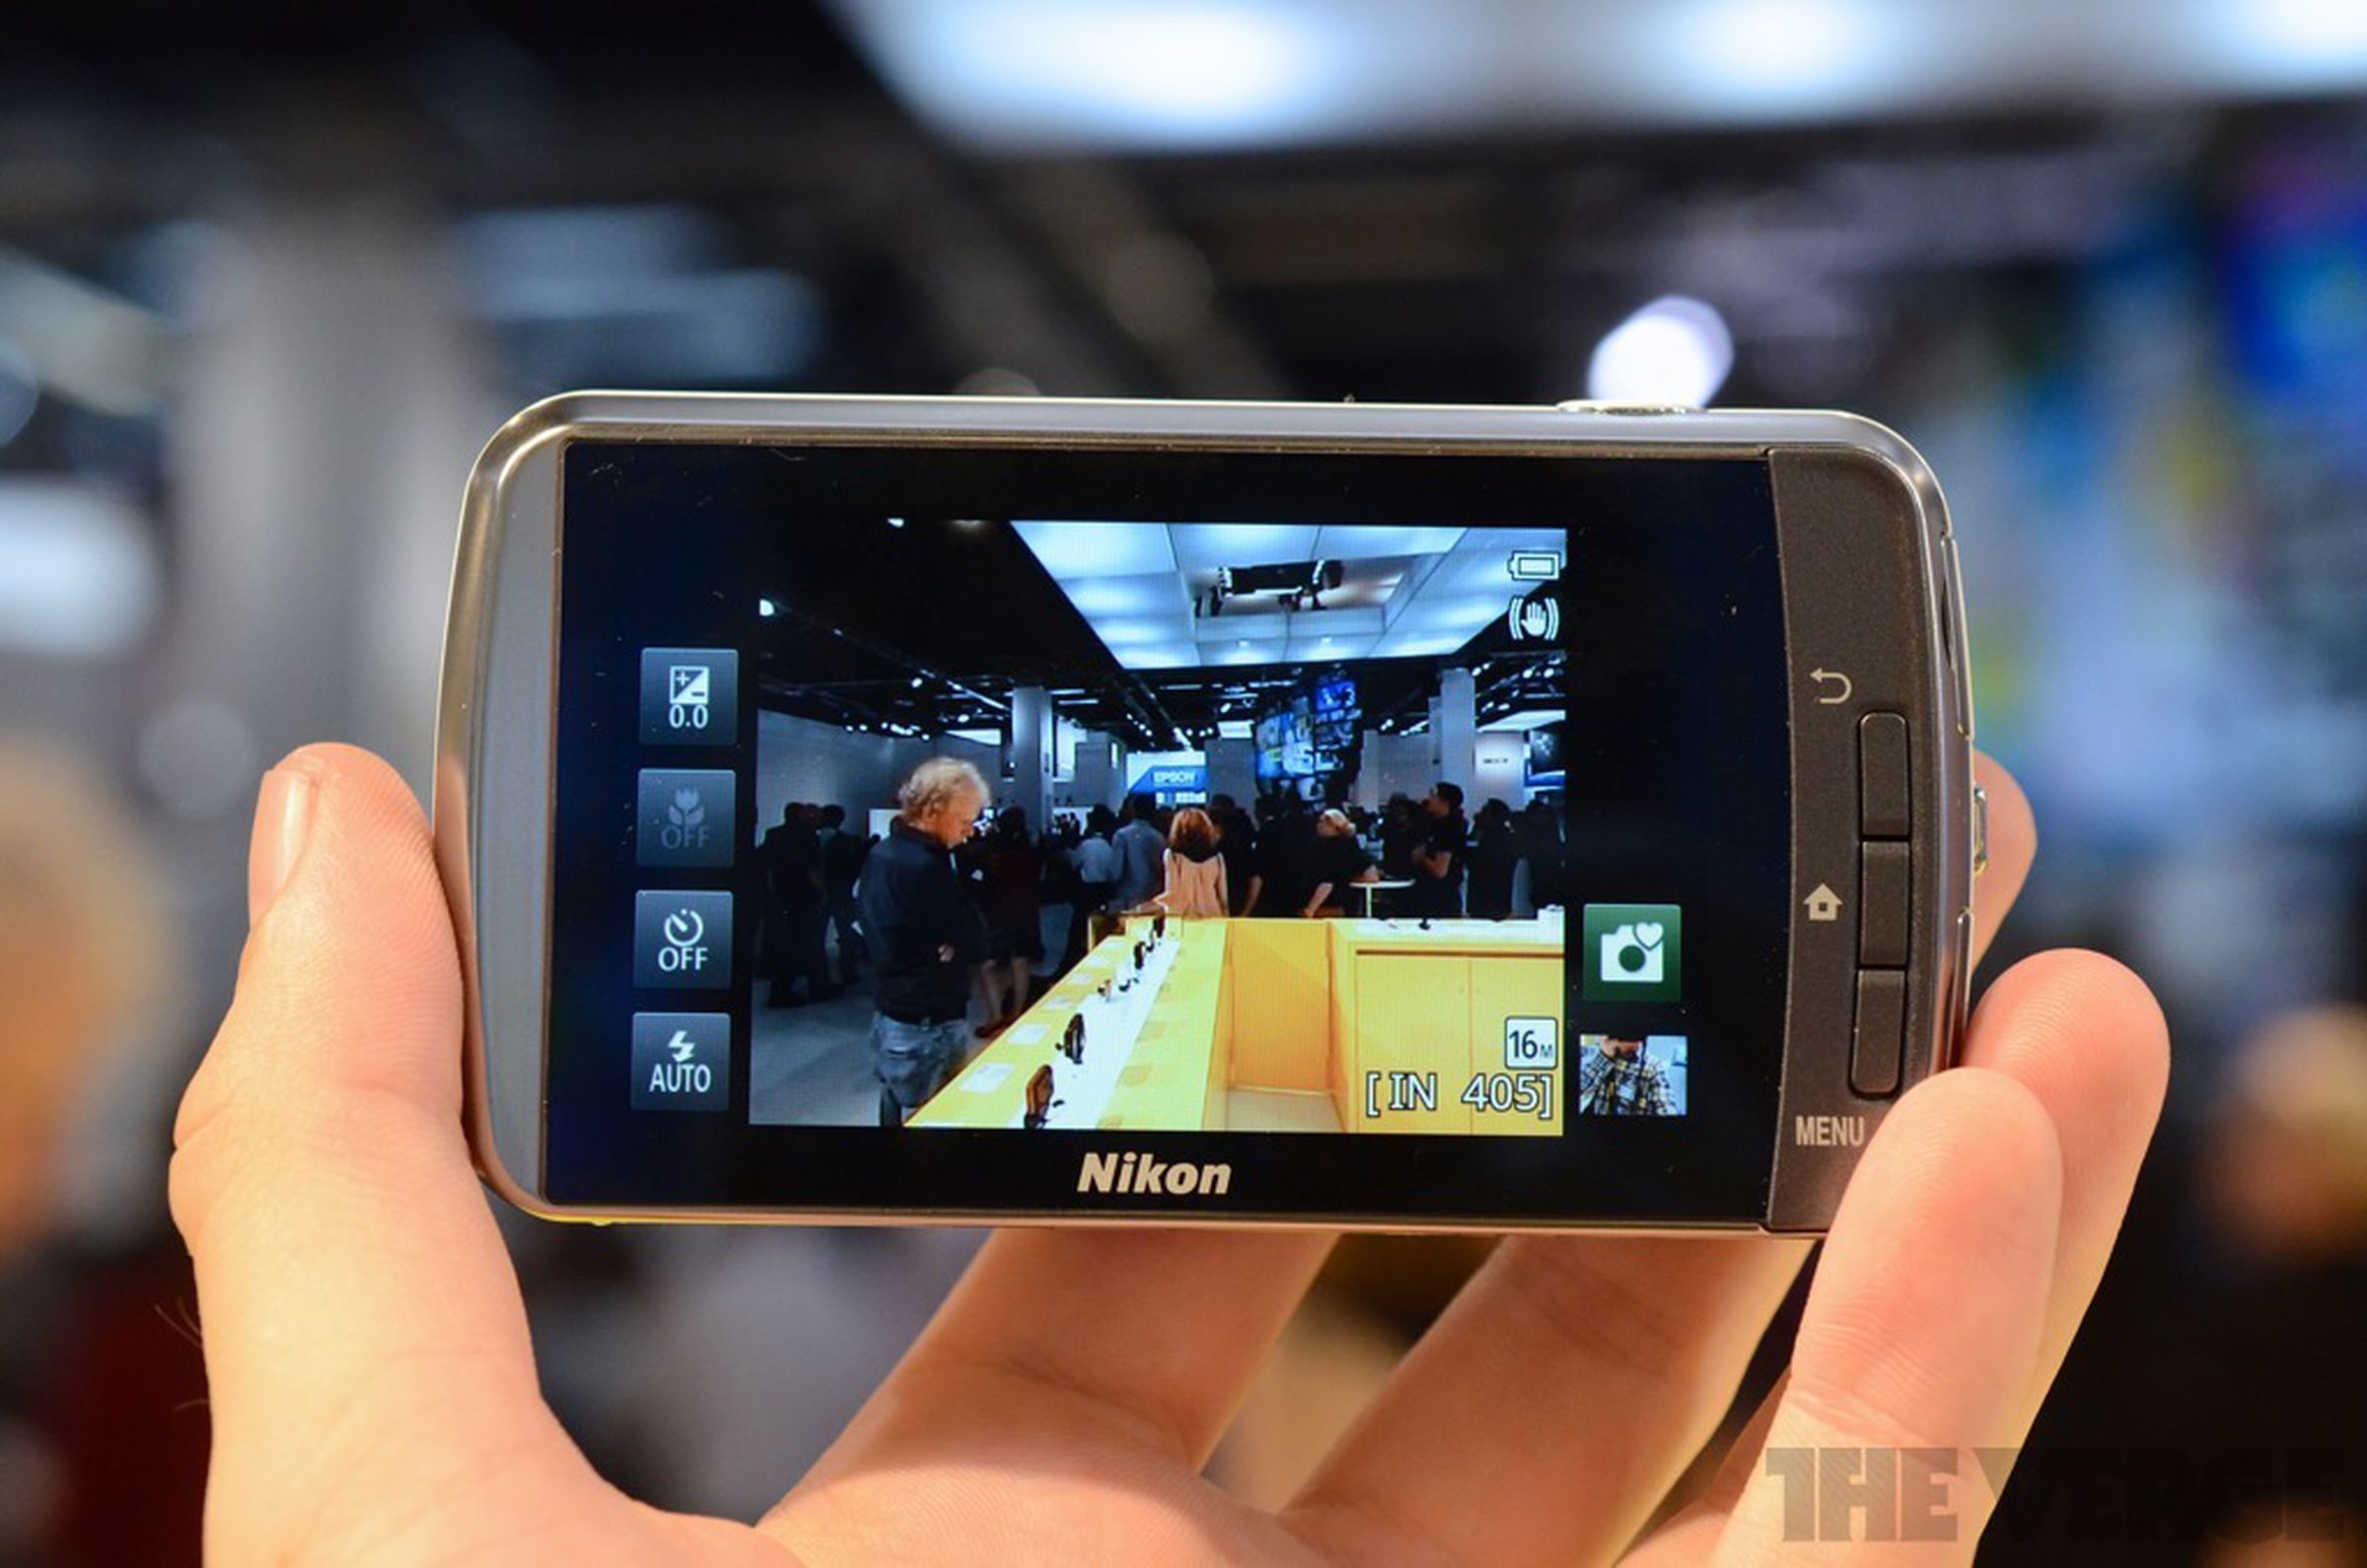 Nikon Coolpix S800c hands-on pictures